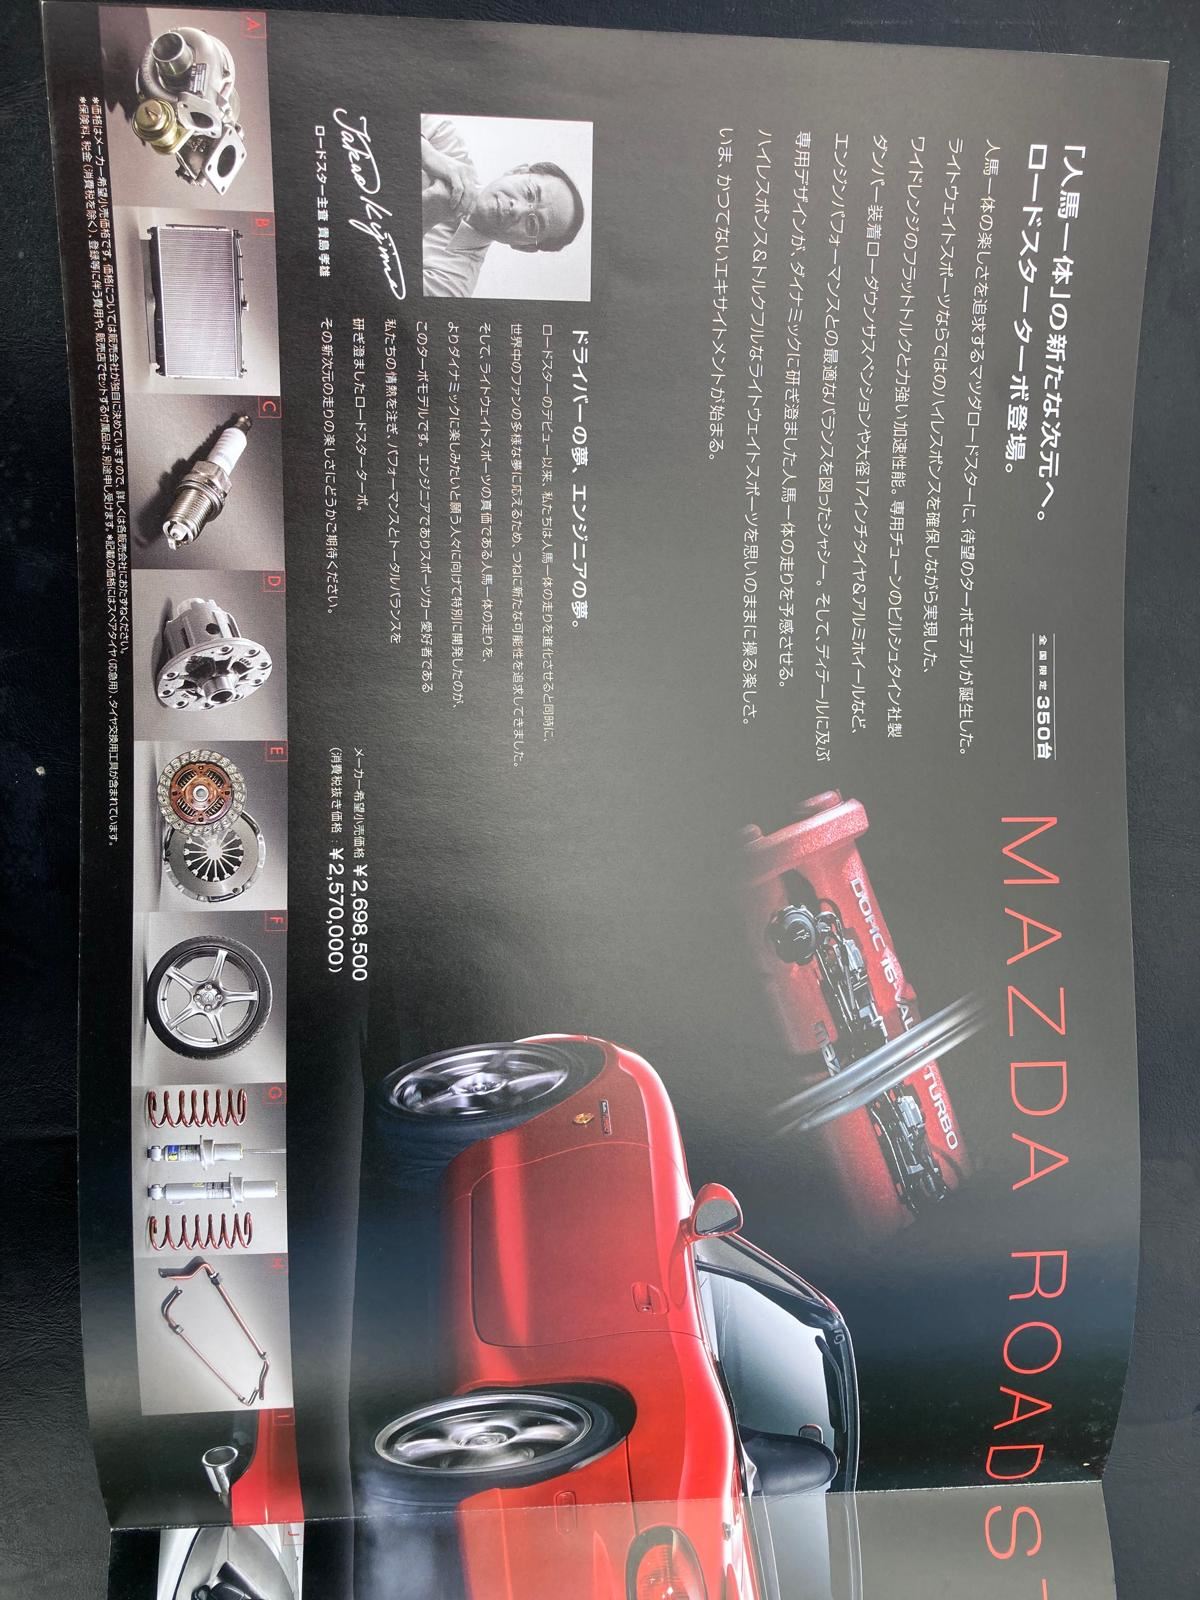 Mazdaspeed mazda mx5 turbo vrs lb3icecqlorqnysfk